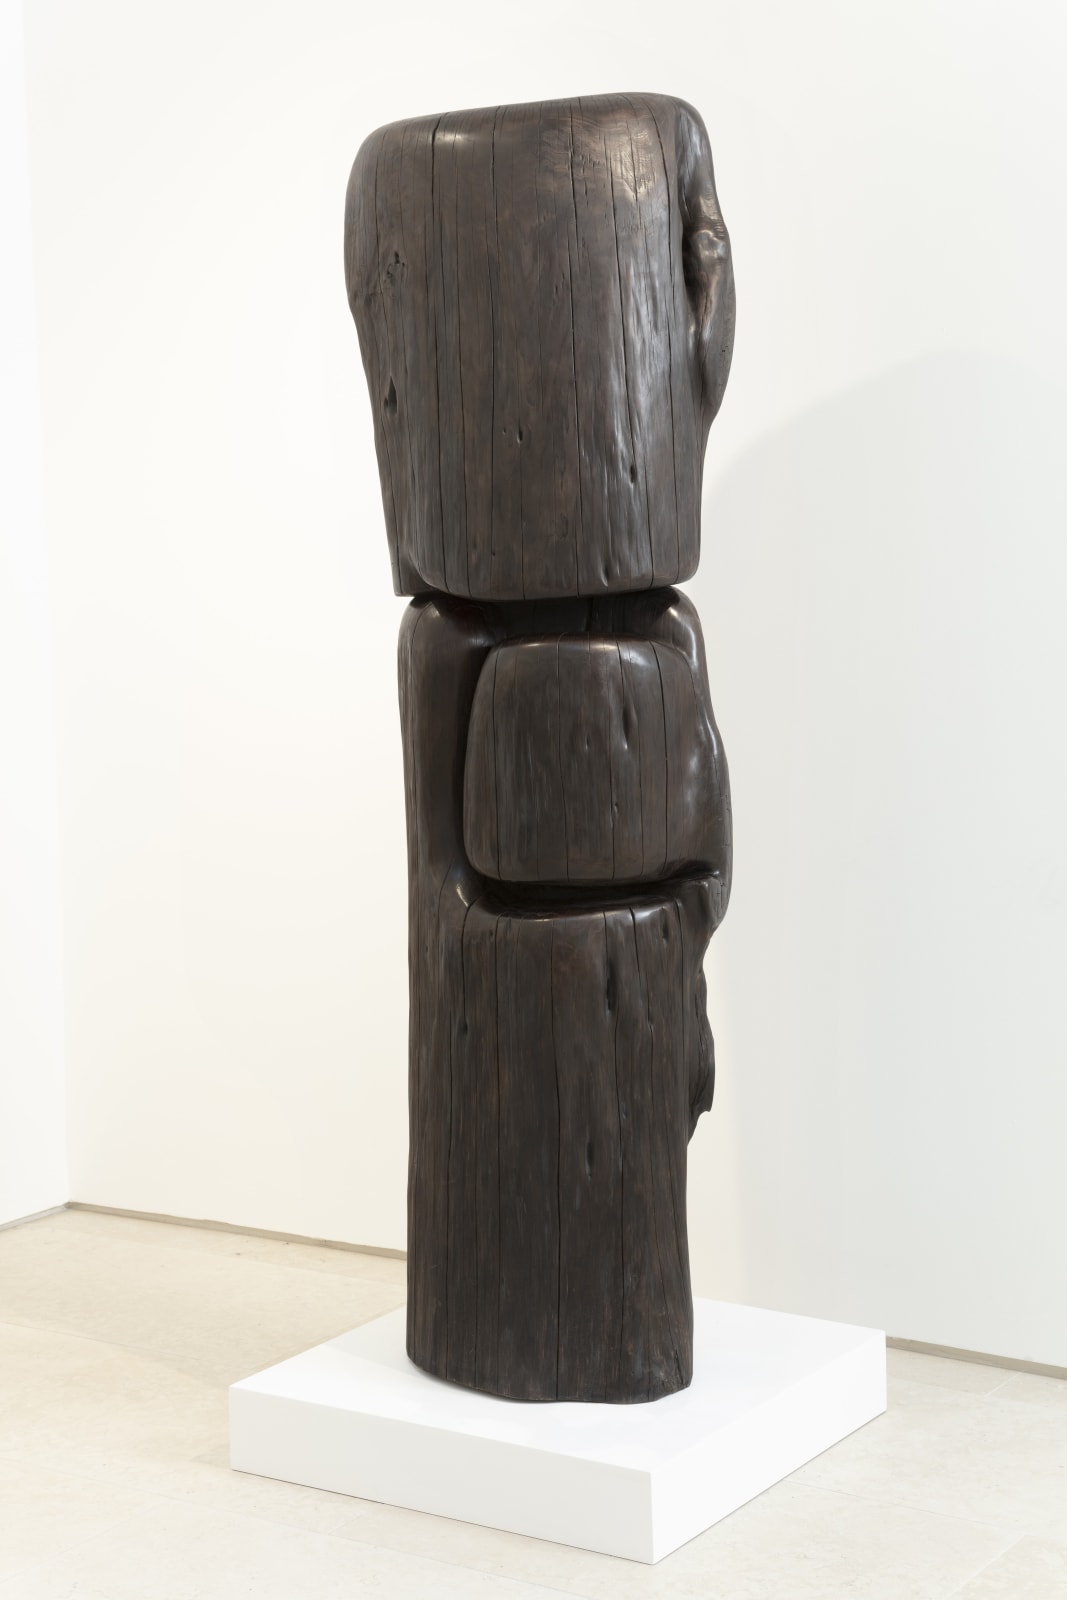 Keping Wang Maternité, 2019 Wood carving / Cypress 212 x 60 x 55 cm